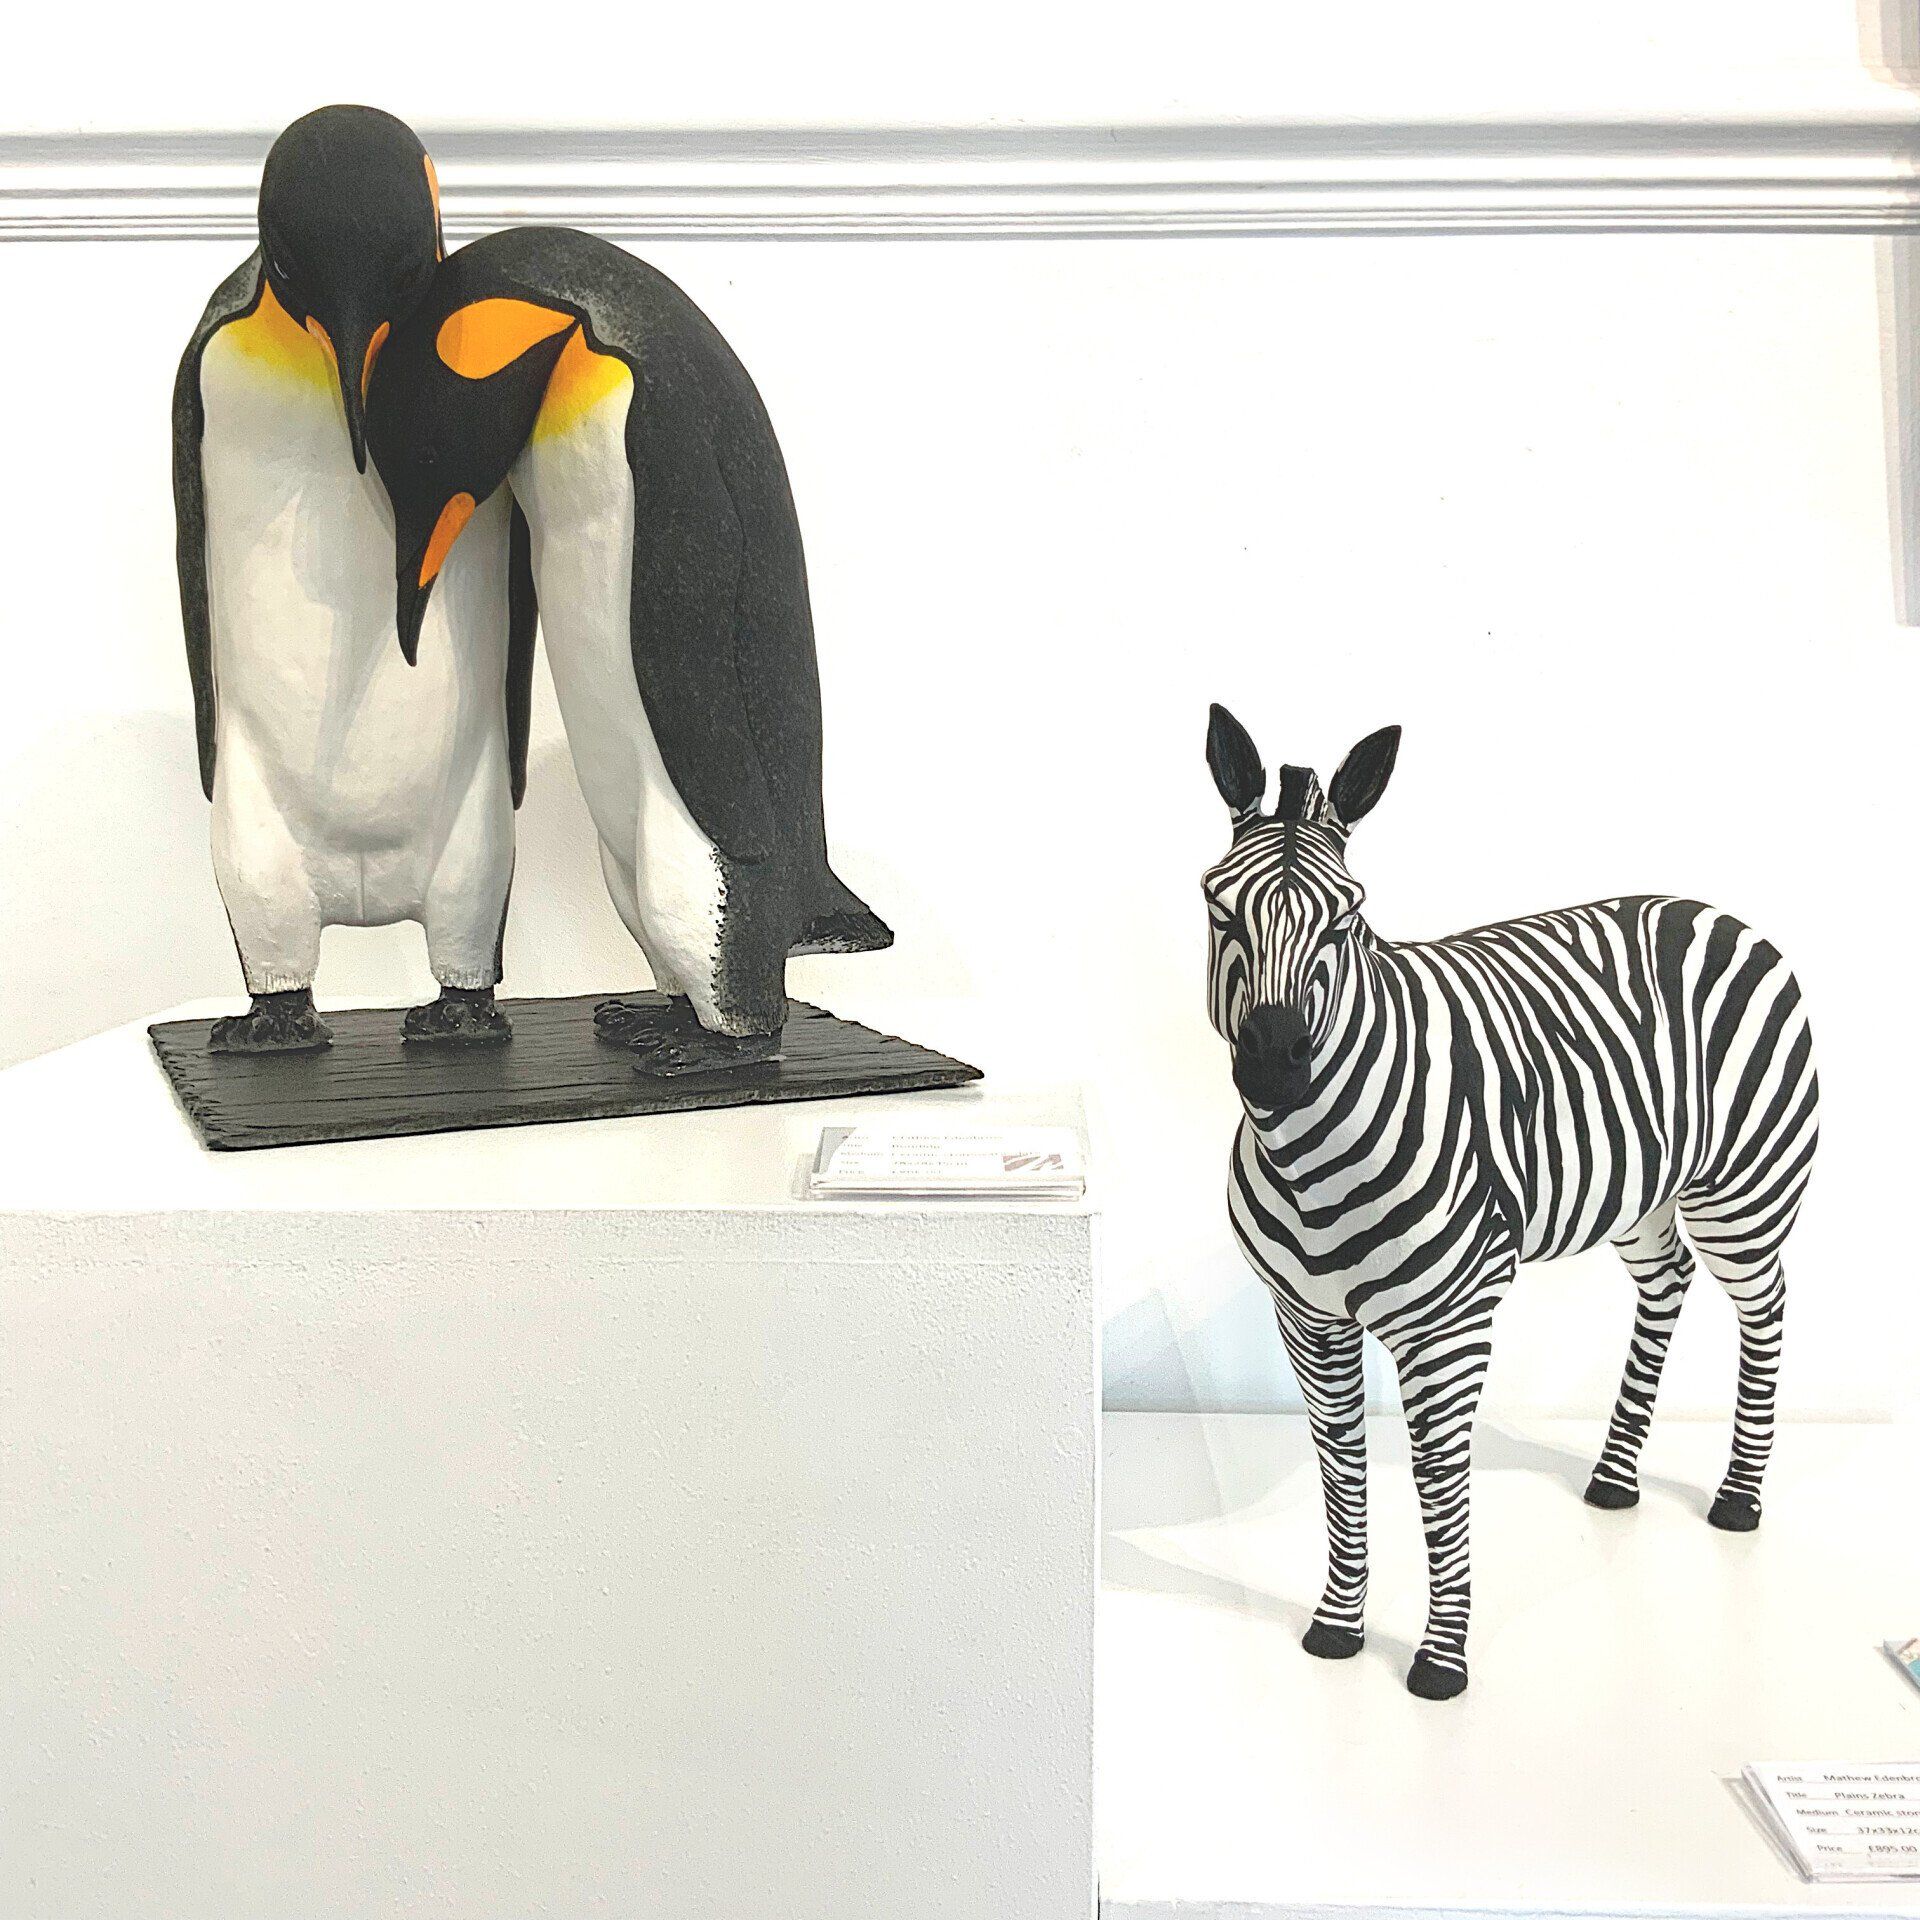 Sculpture of penguin couple and sculpture of zebra by Mathew Edenbrow at Watson Gallery Edinburgh